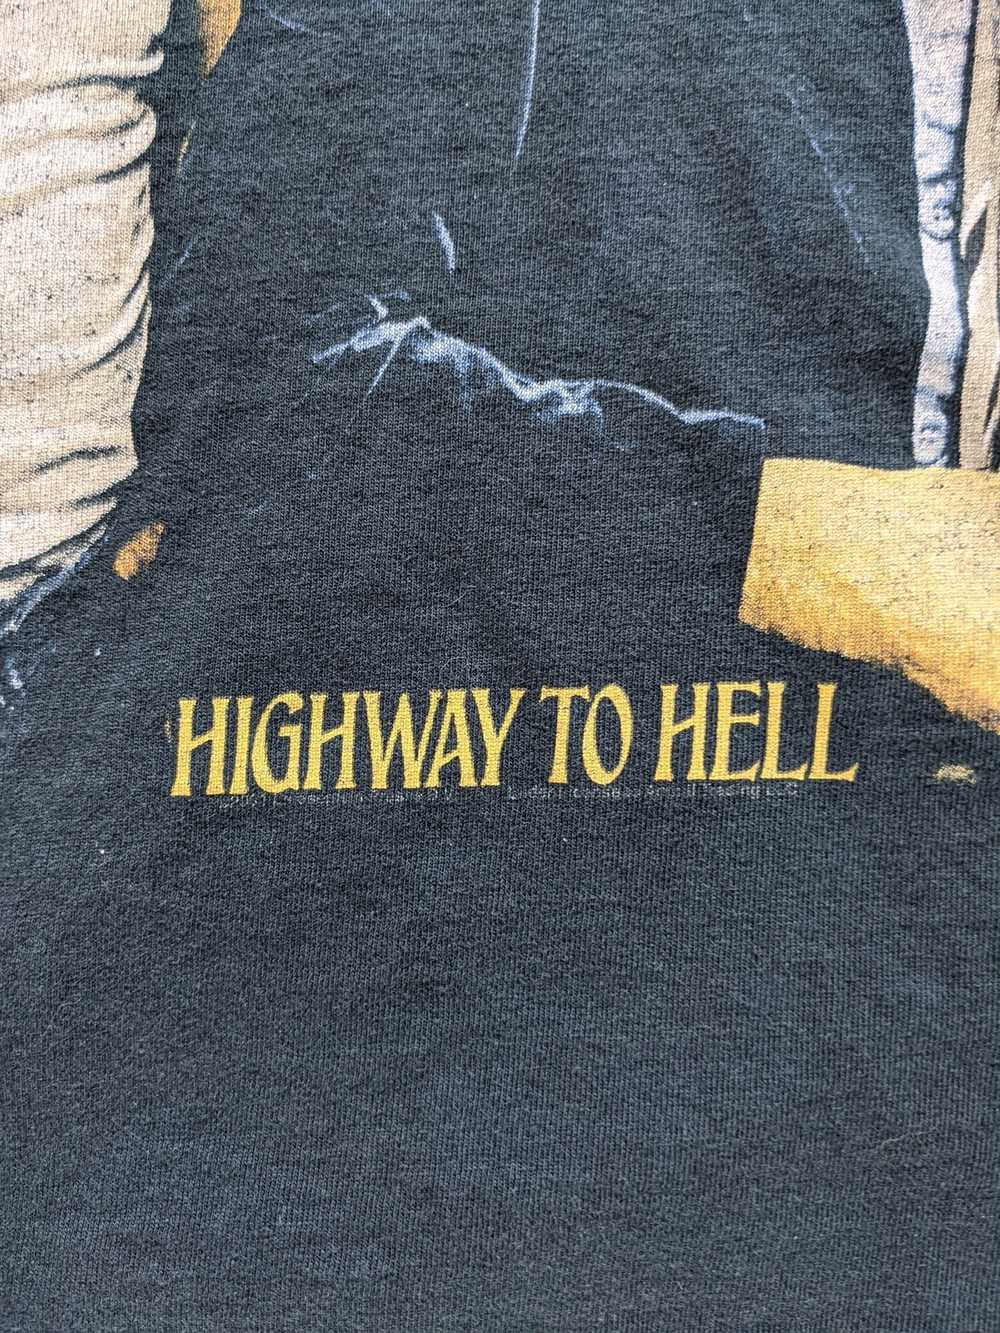 Vintage 2001 AC/DC Highway to Hell Tee - image 4